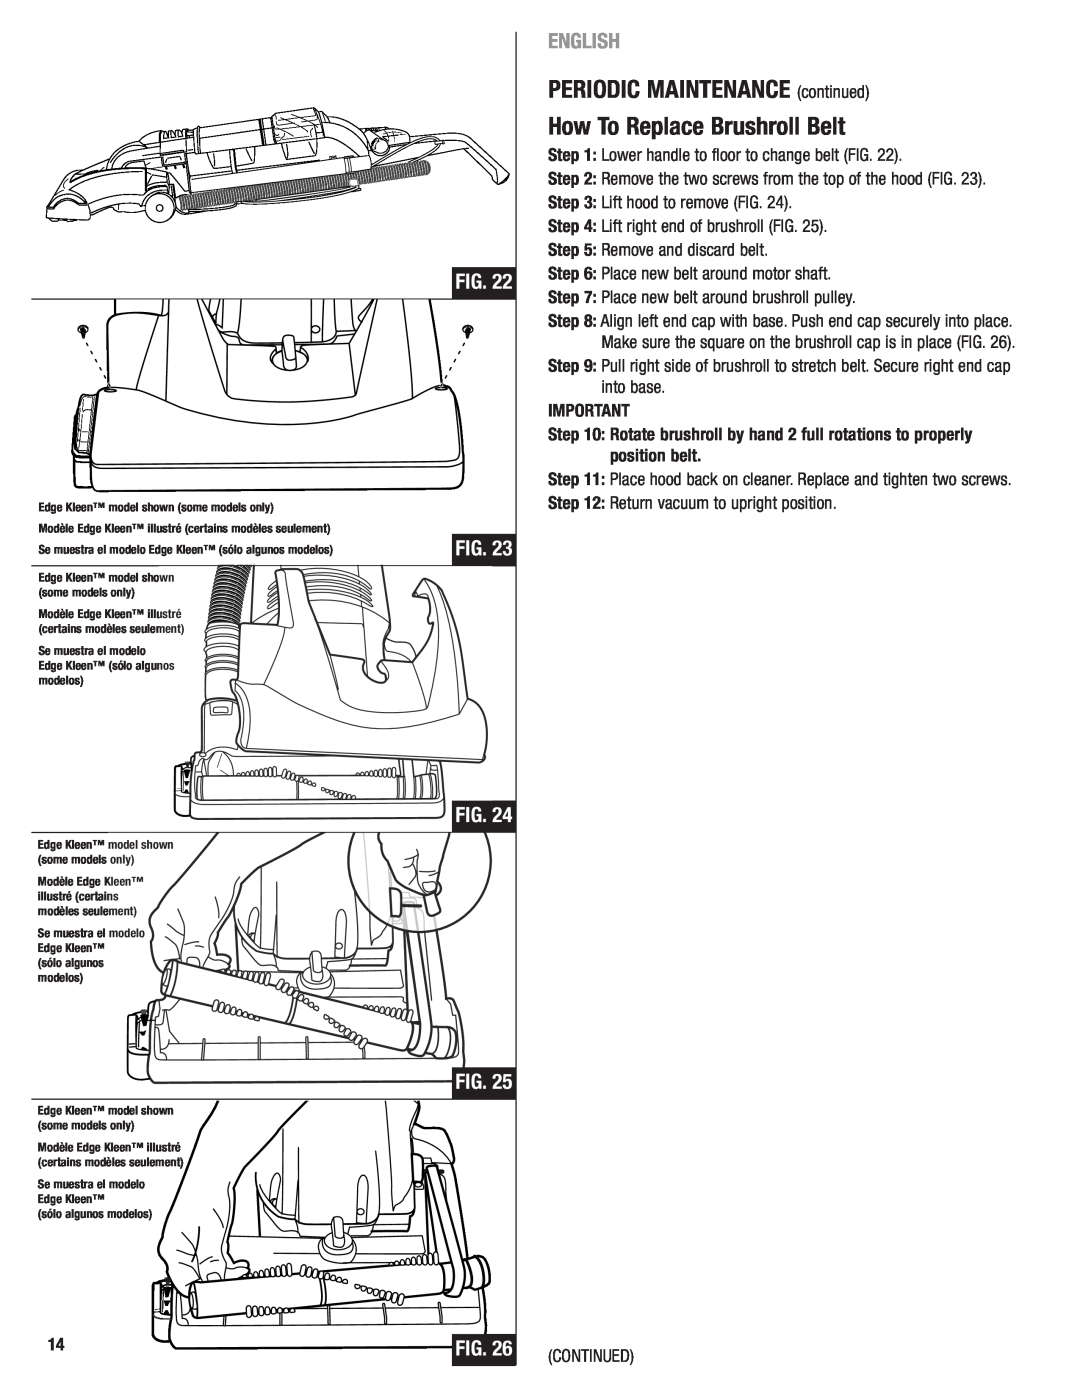 Eureka 2940 manual PERIODIC MAINTENANCE continued How To Replace Brushroll Belt, English 